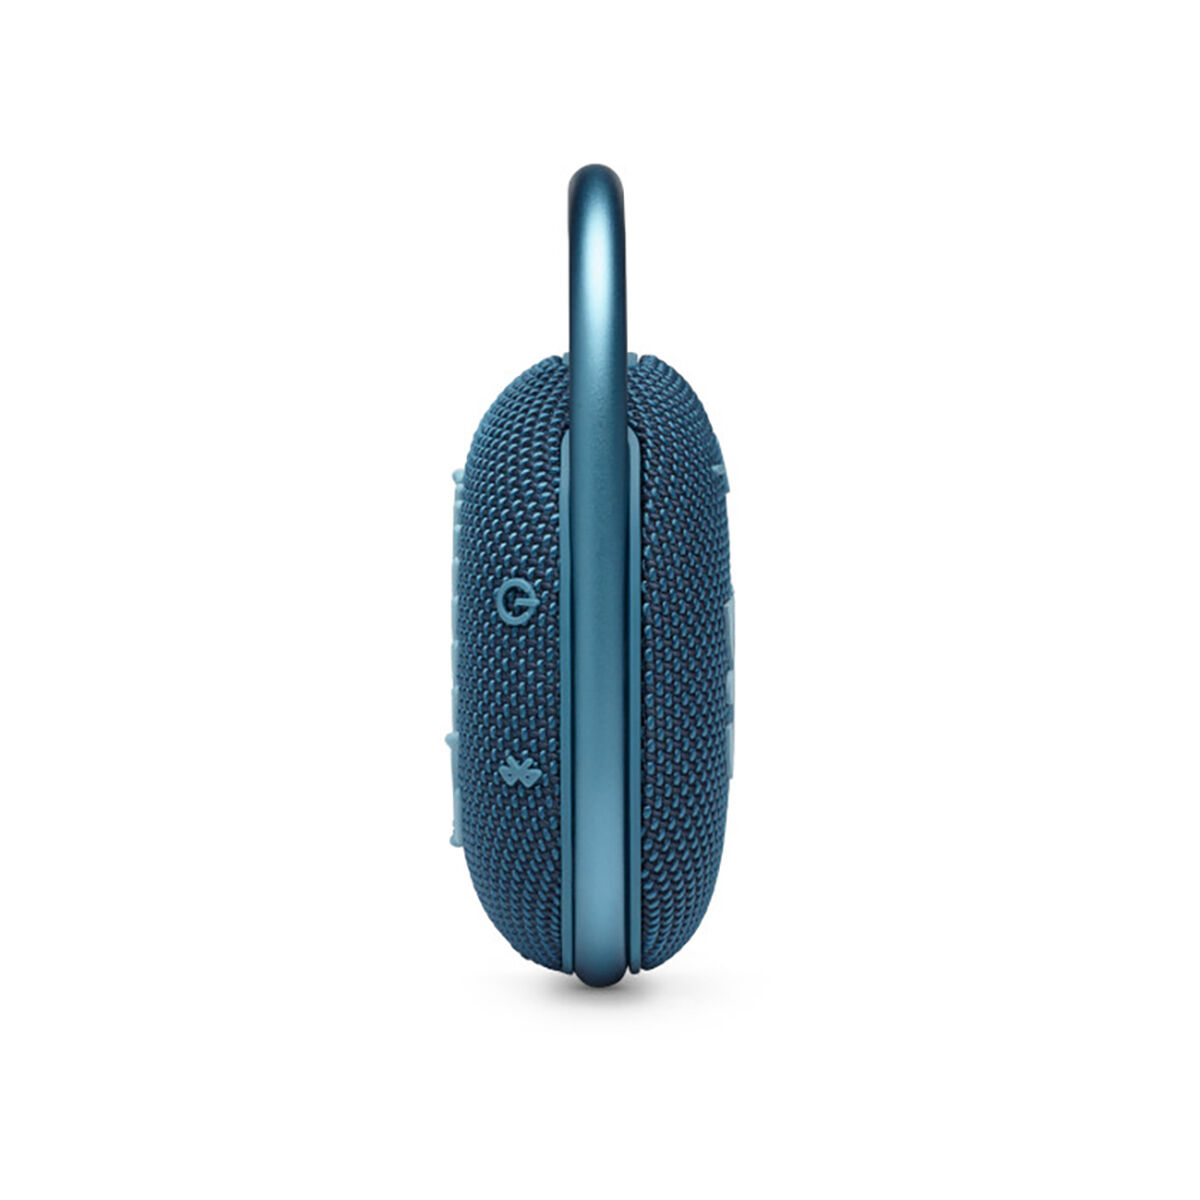 Parlante Bluetooth JBL Clip 4 Azul